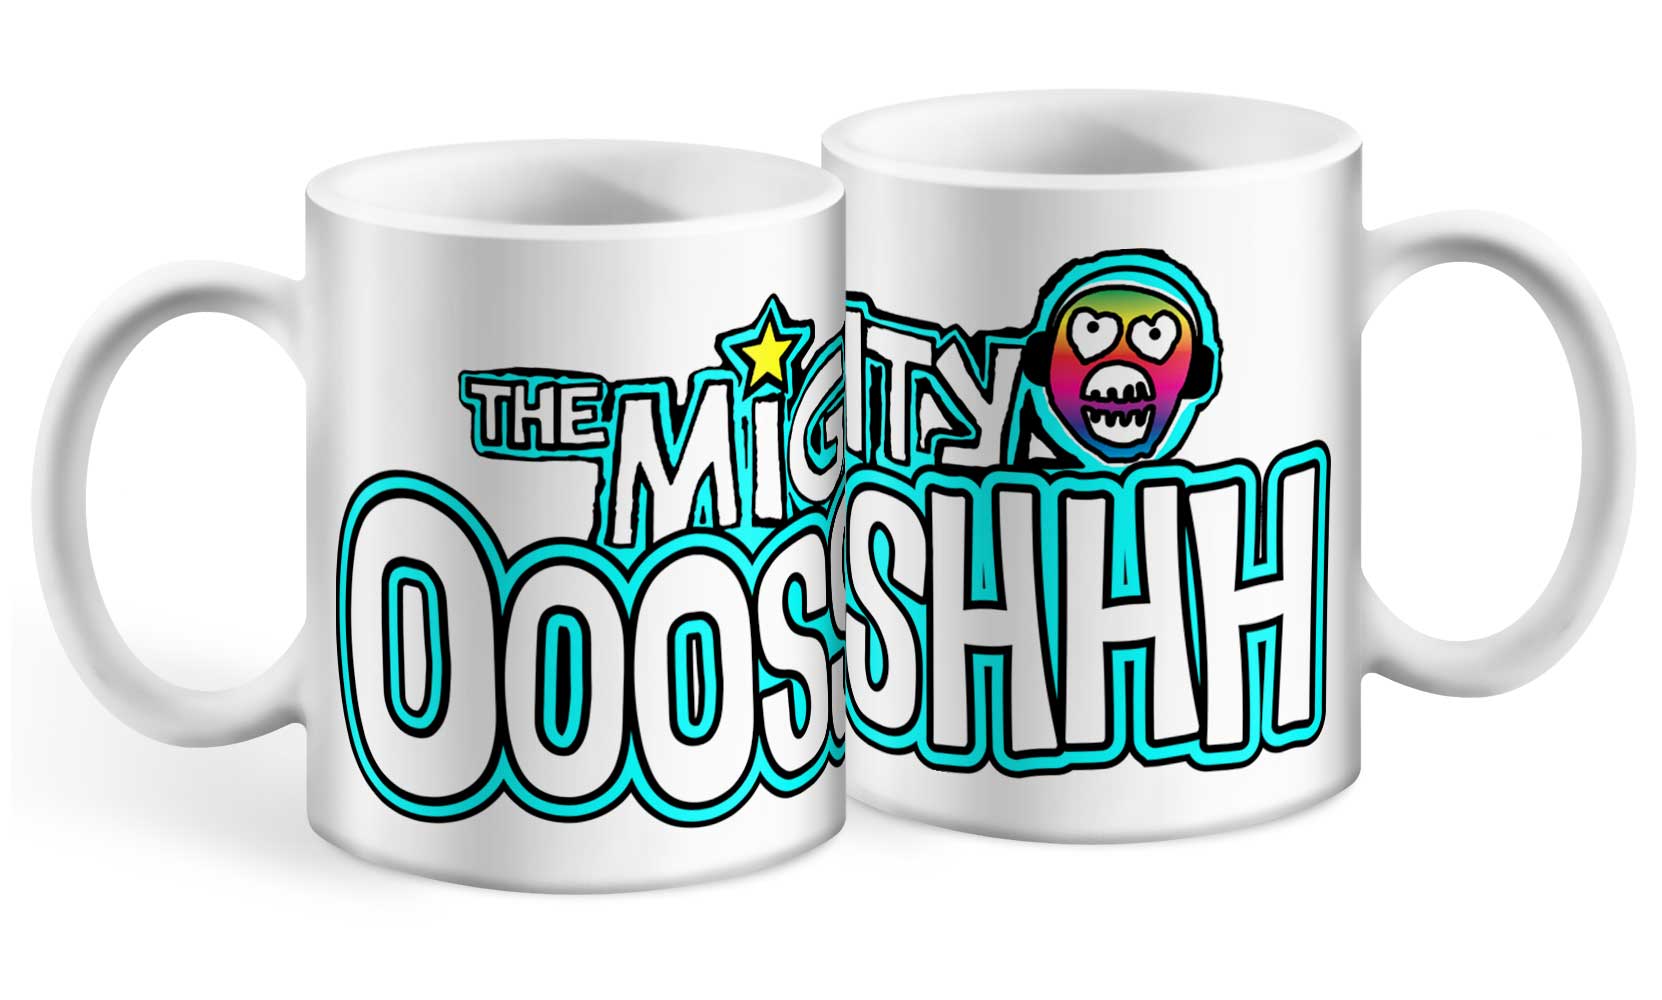 Mighty Ooossshhh Logo Mug